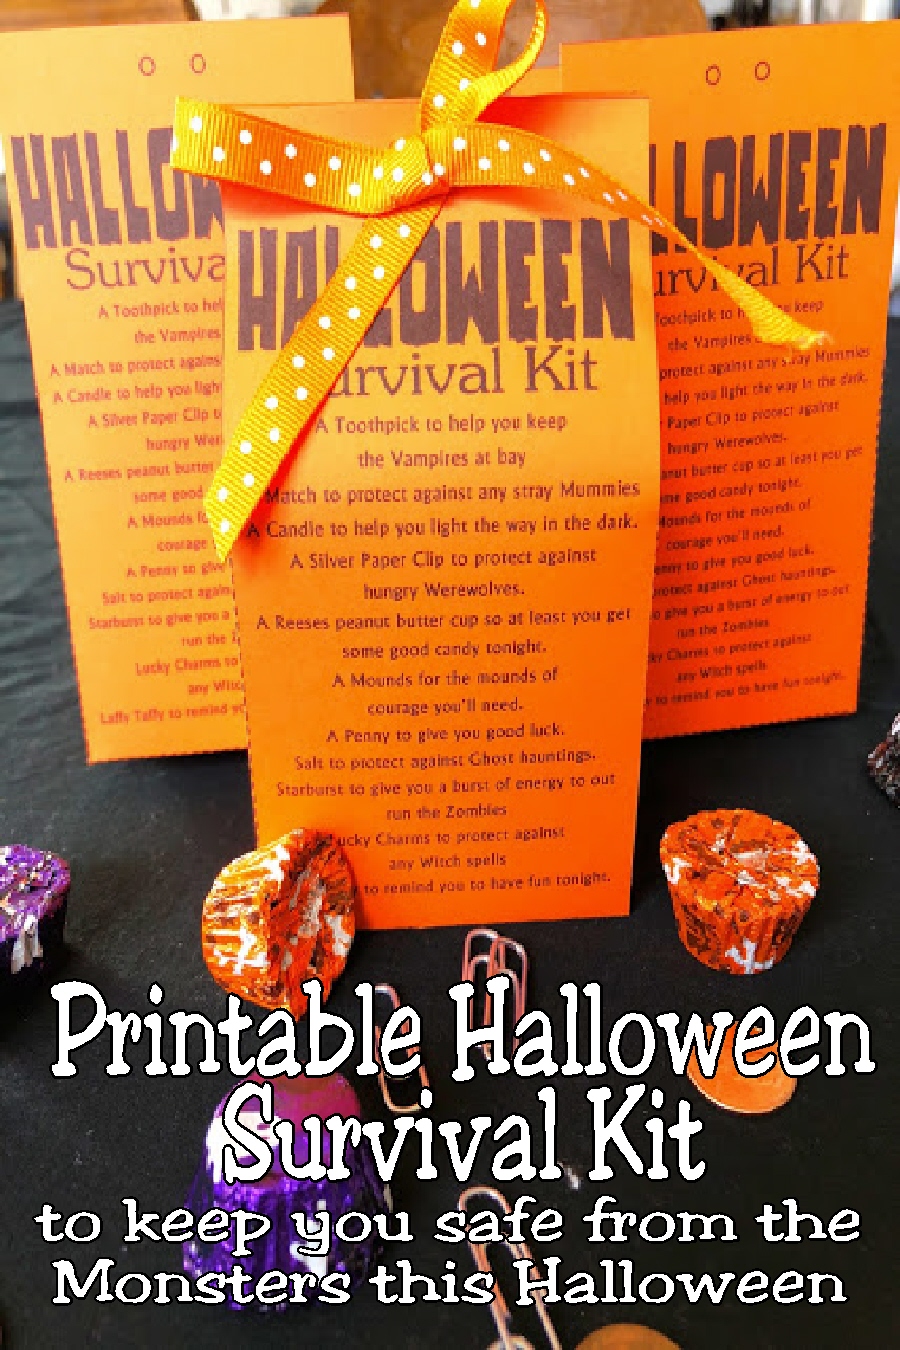 DIY Party Mom: Halloween Printable Survival Kit to Keep you Safe